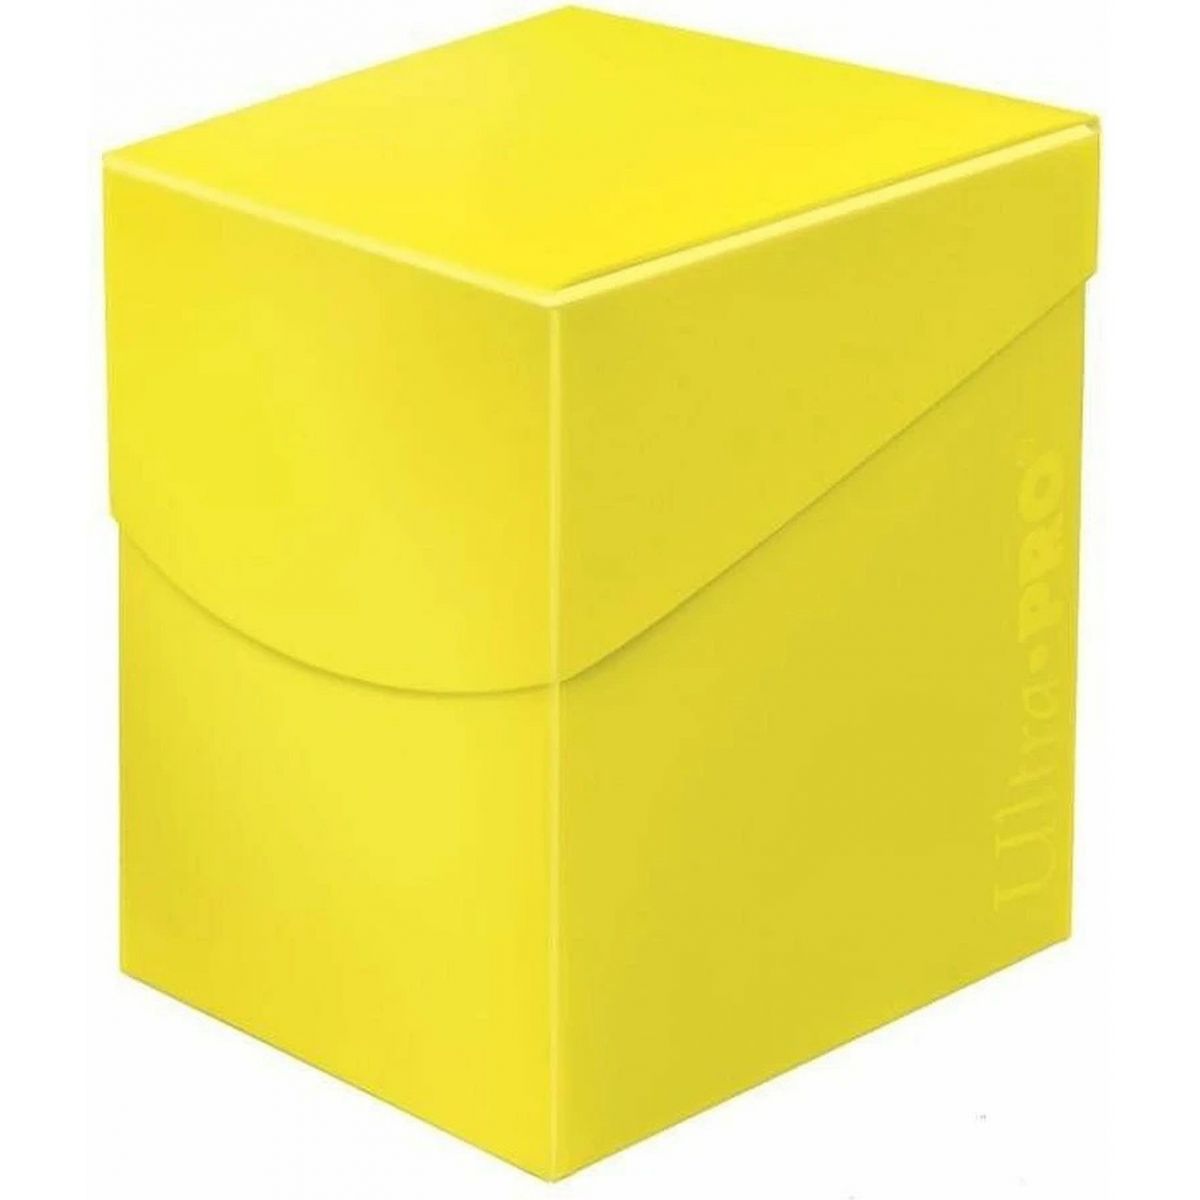 Item Deckbox - Eclipse PRO 100+ Zitronengelb